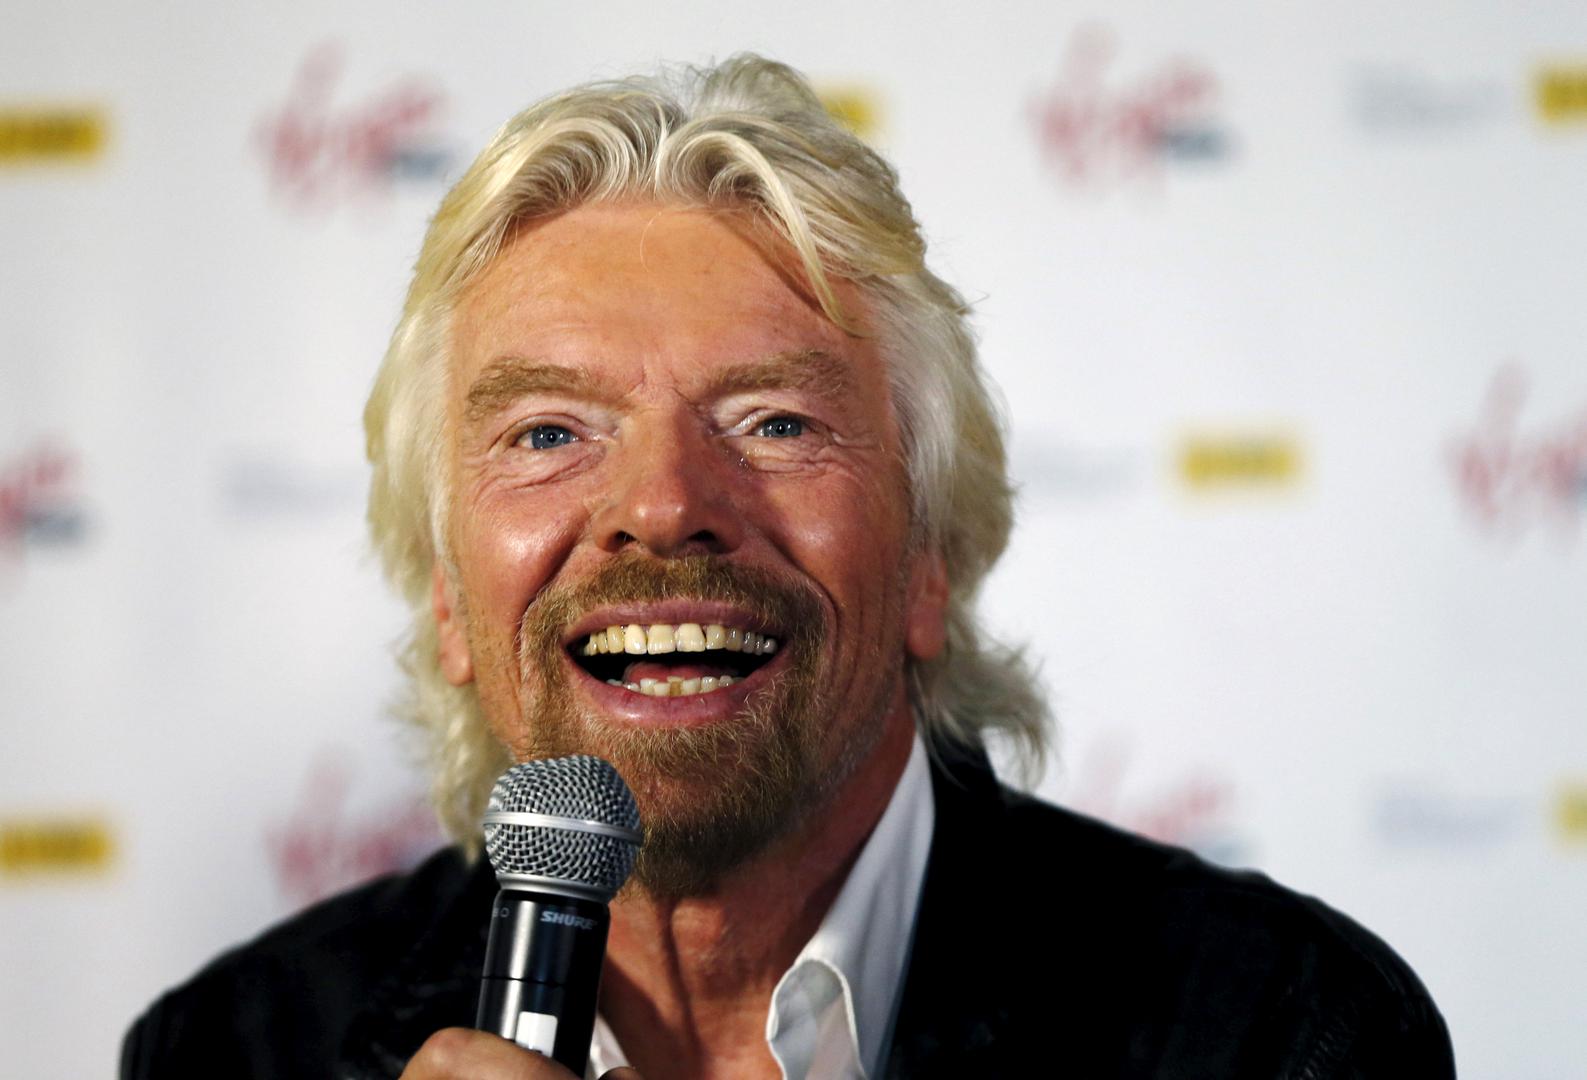 Richard Branson izbačen je iz škole, a zatim je pokrenuo časopis za mlade "Student". Sir Richard Charles Nicholas Branson je britanski poslovni čovjek čije se bogatstvo procijenjuje na 7.8 milijardi američkih dolara. Vlasnik je branda Virgin koji sadrži 350 kompanija, od kojih je najpoznatija zrakoplovna kompanija Virgin Atlantic.